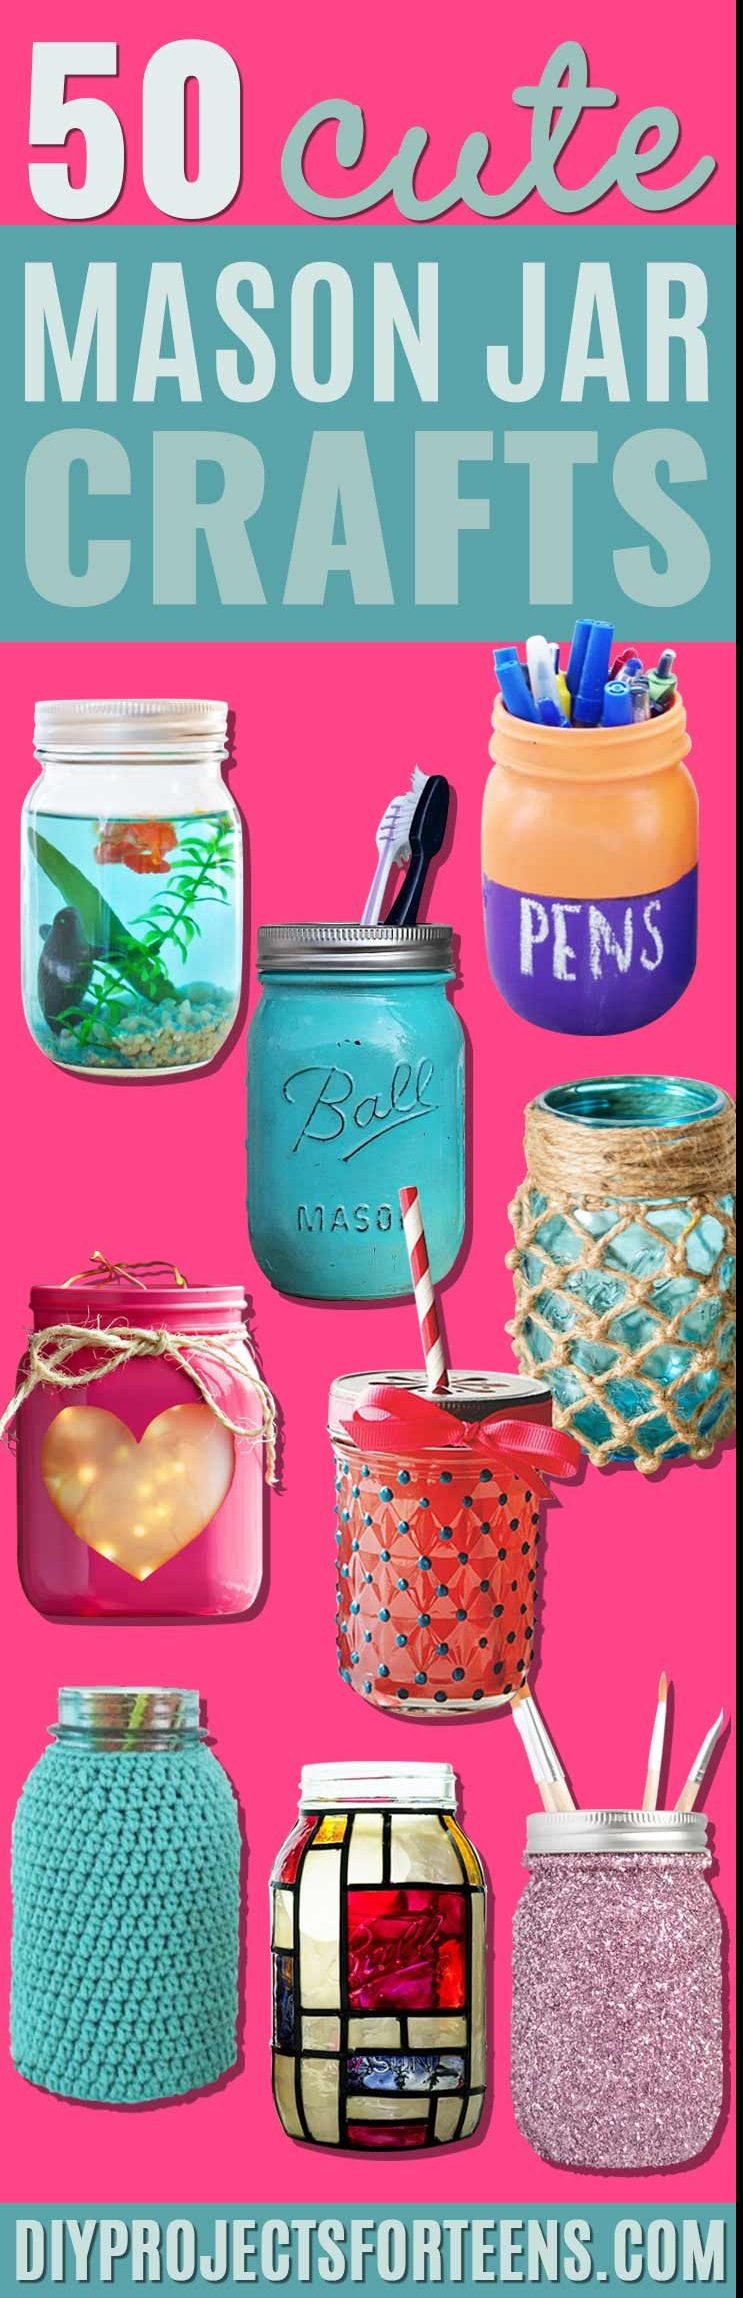 Easy DIY Mason Jar Ideas - Fun Crafts, Creative Room Decor, Homemade Gifts, Creative Home Decor Projects and DIY Mason Jar Lights - Cool Crafts for Teens and Tween Girls 